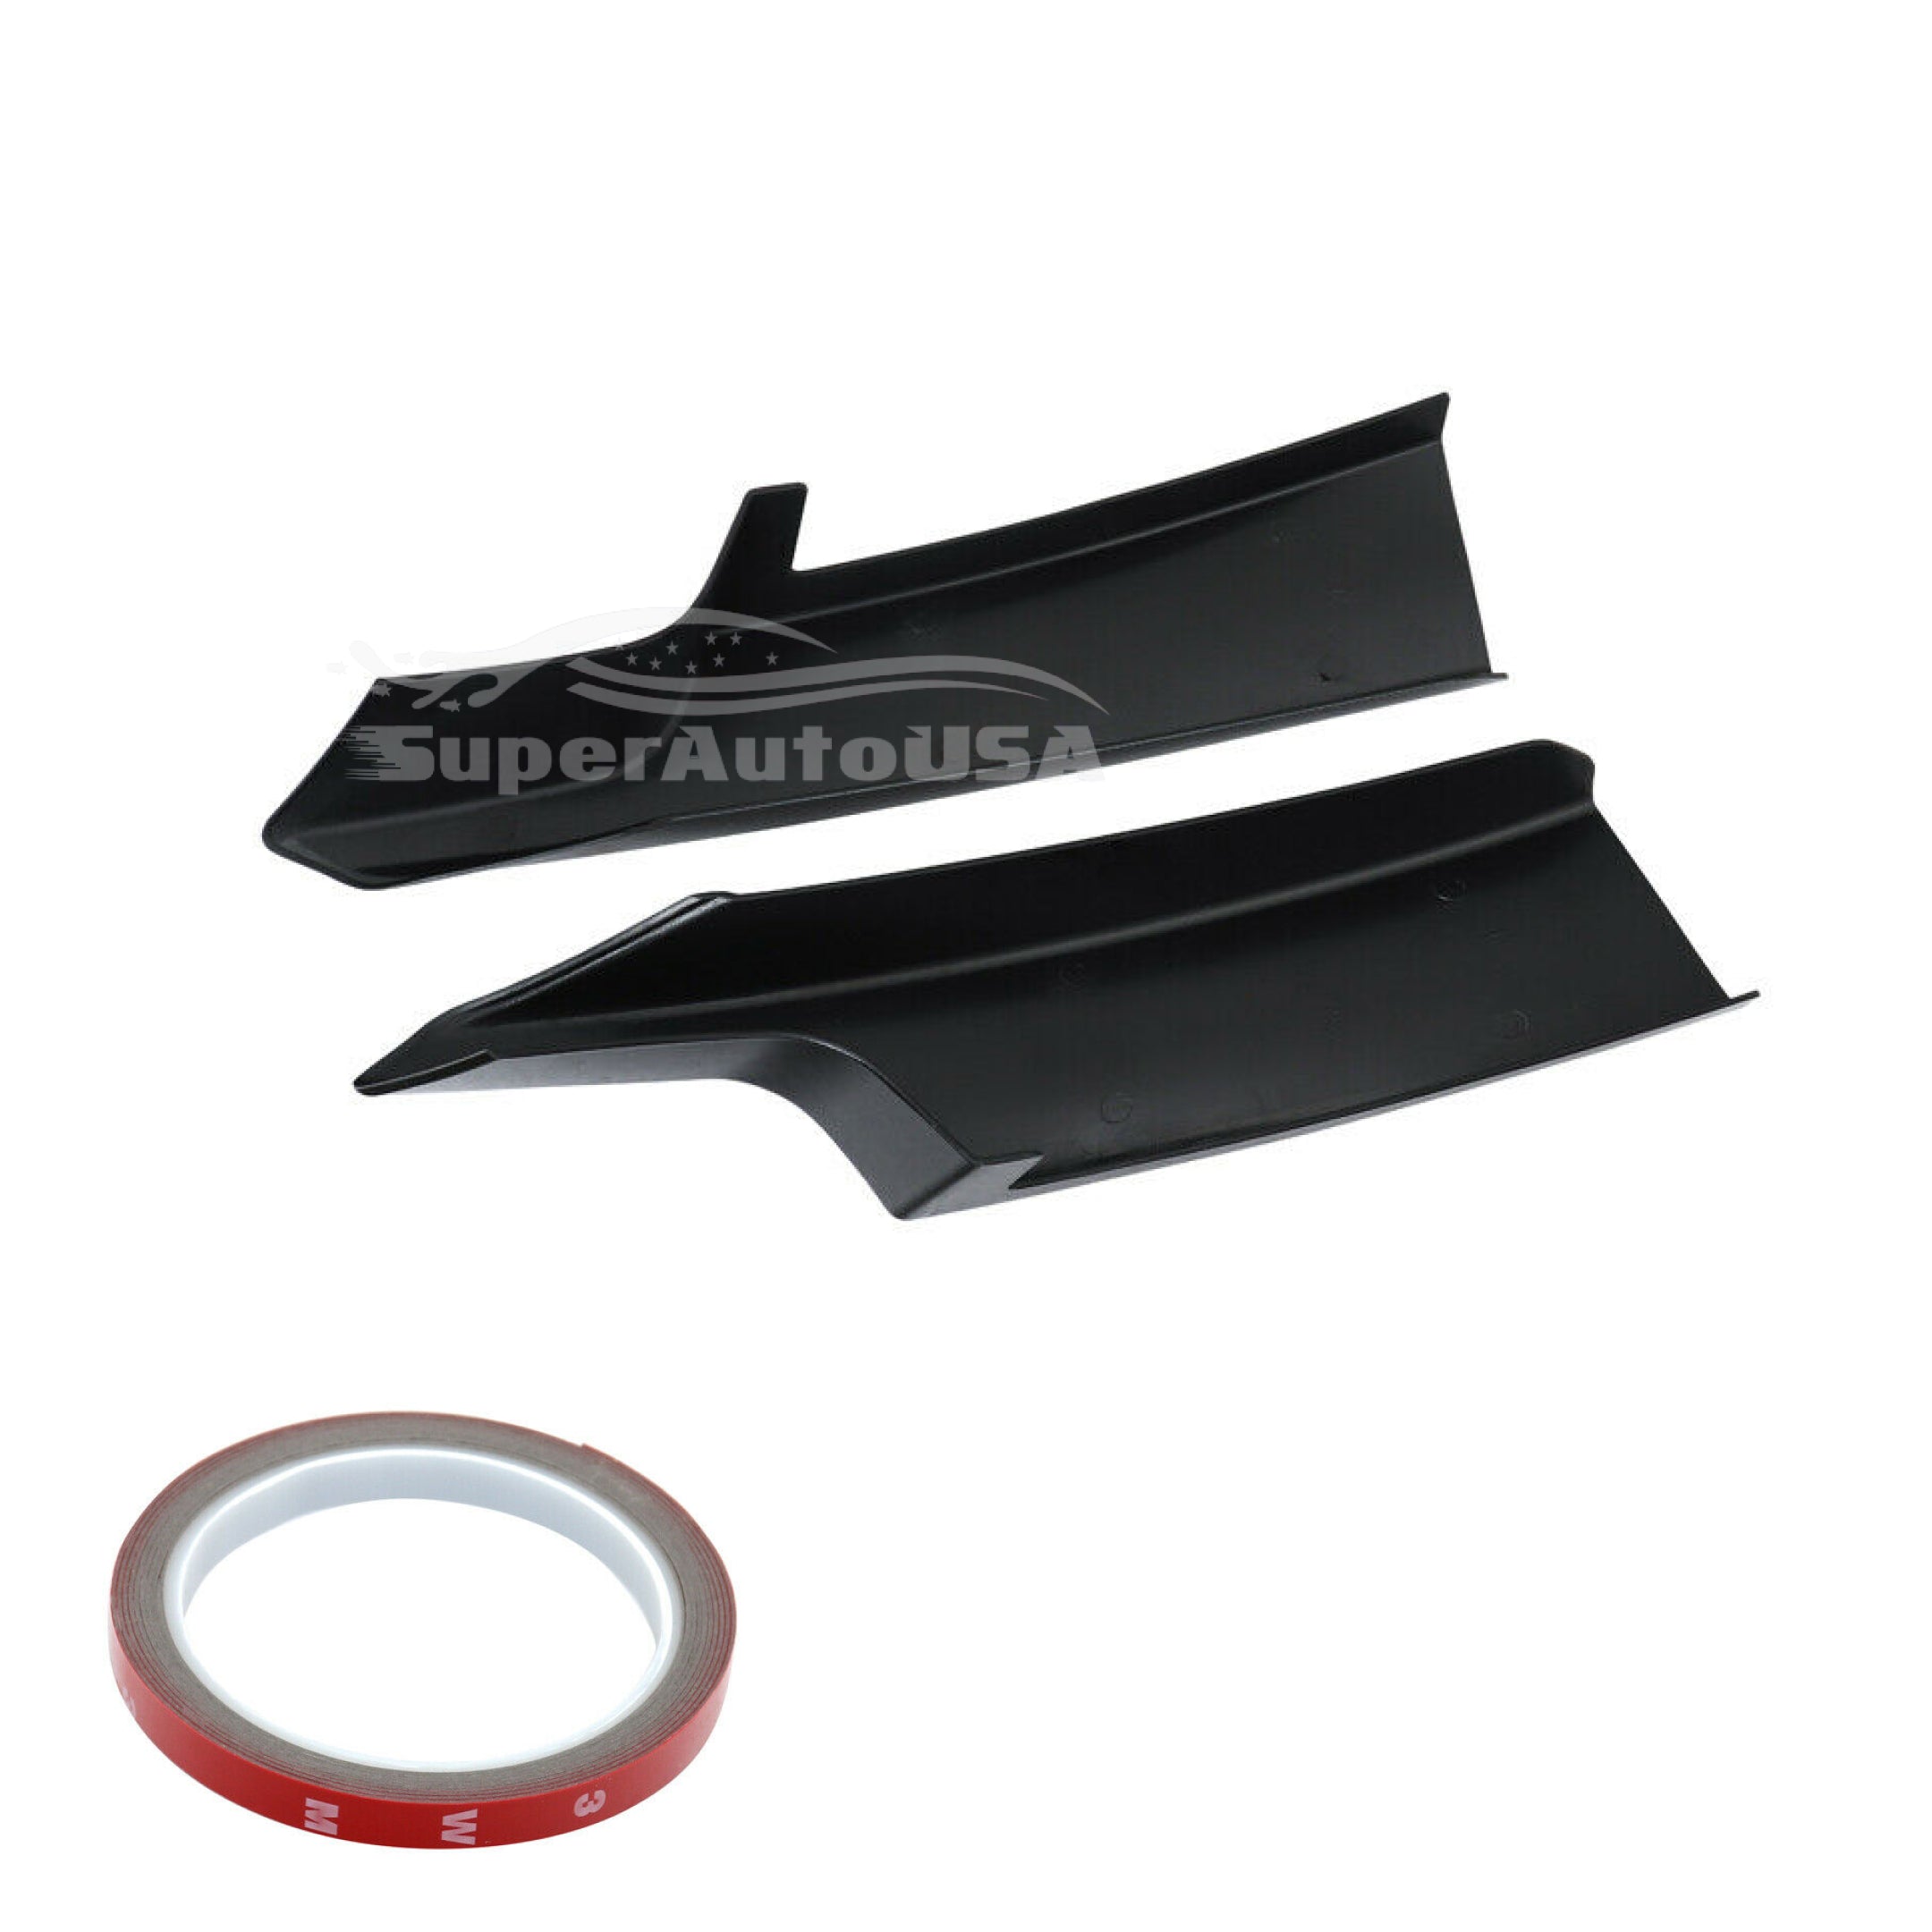 Compatible con divisores de esquina de labios de parachoques delantero BMW 3 Series F30 M Sport 2012-2018 (negro brillante)